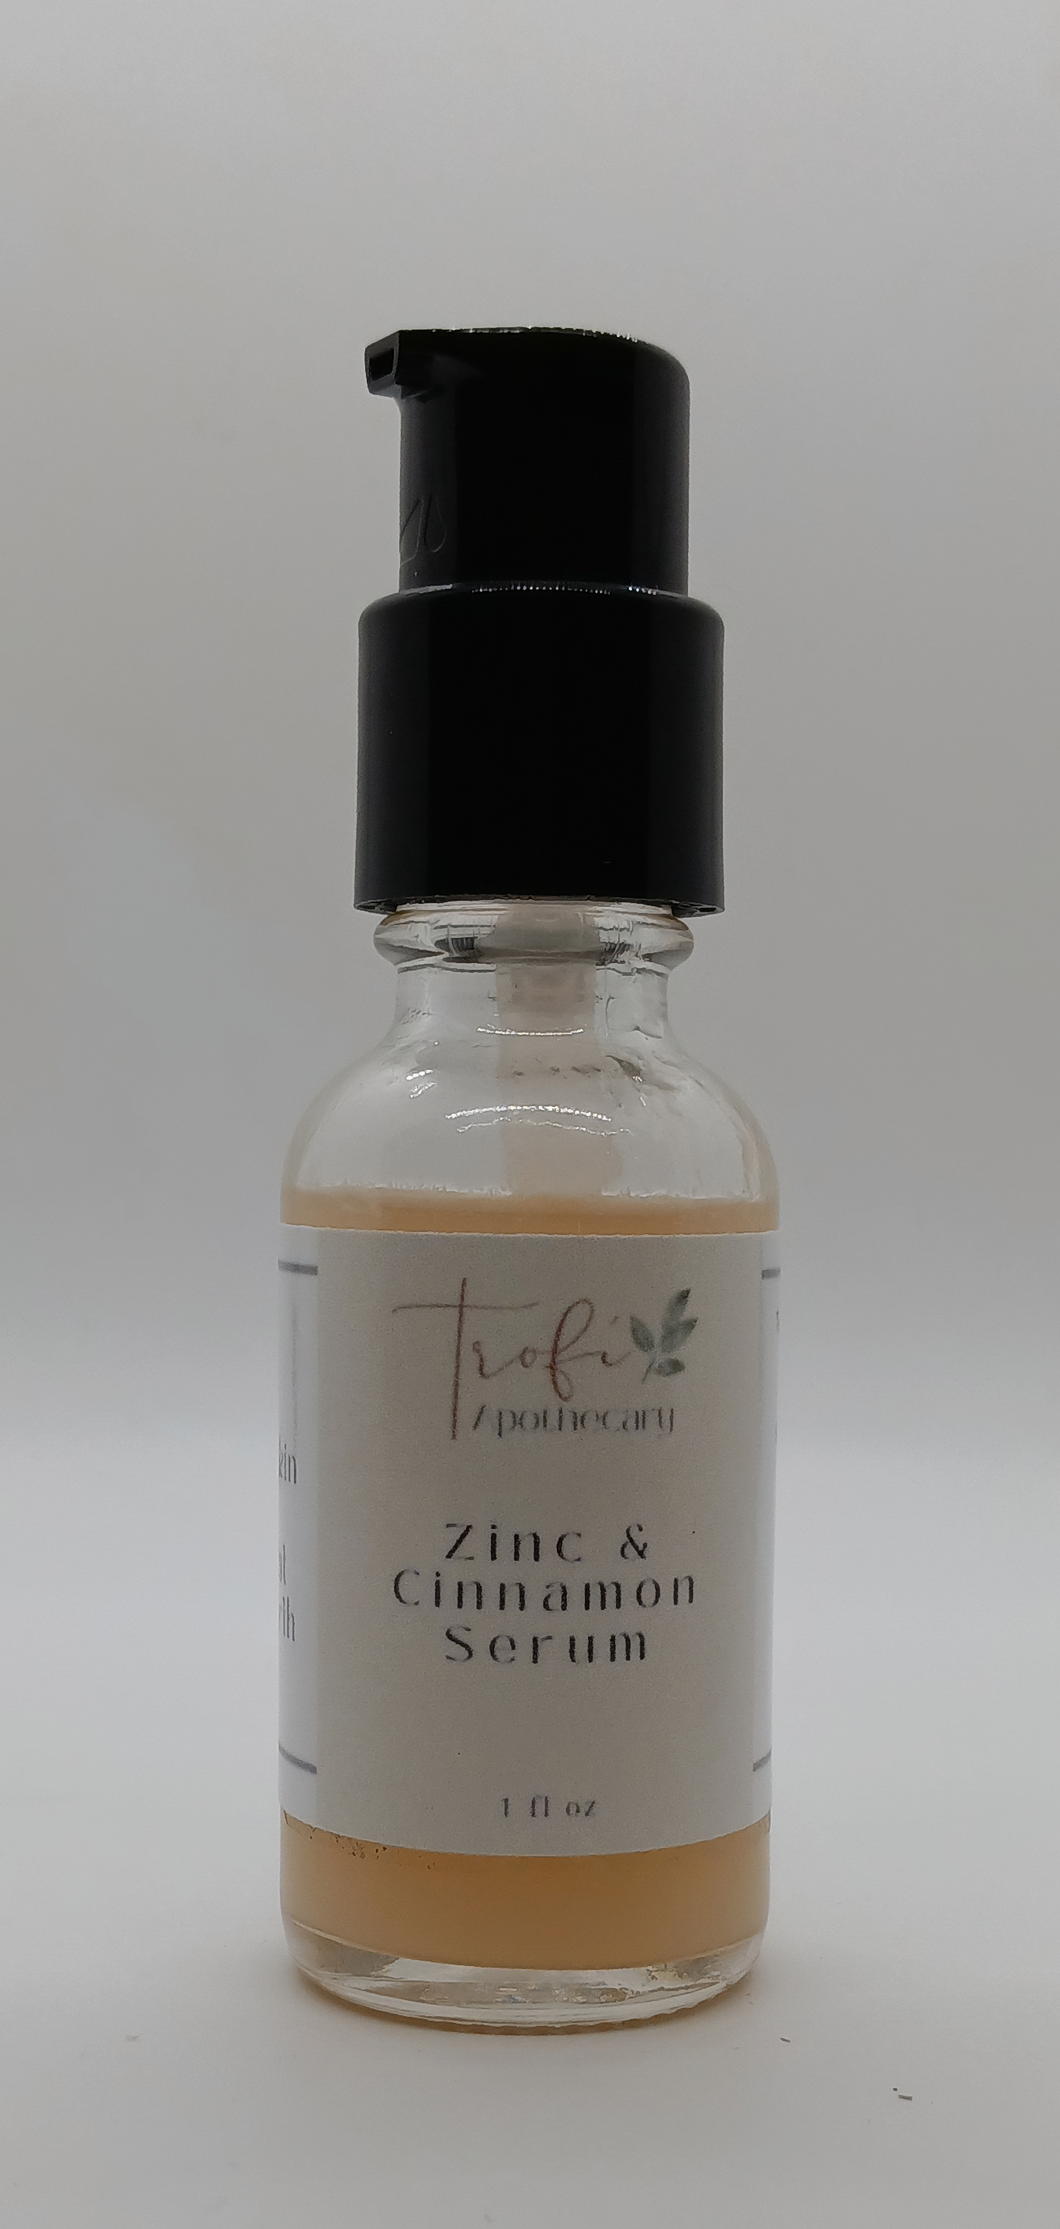 Zinc & Cinnamon Serum